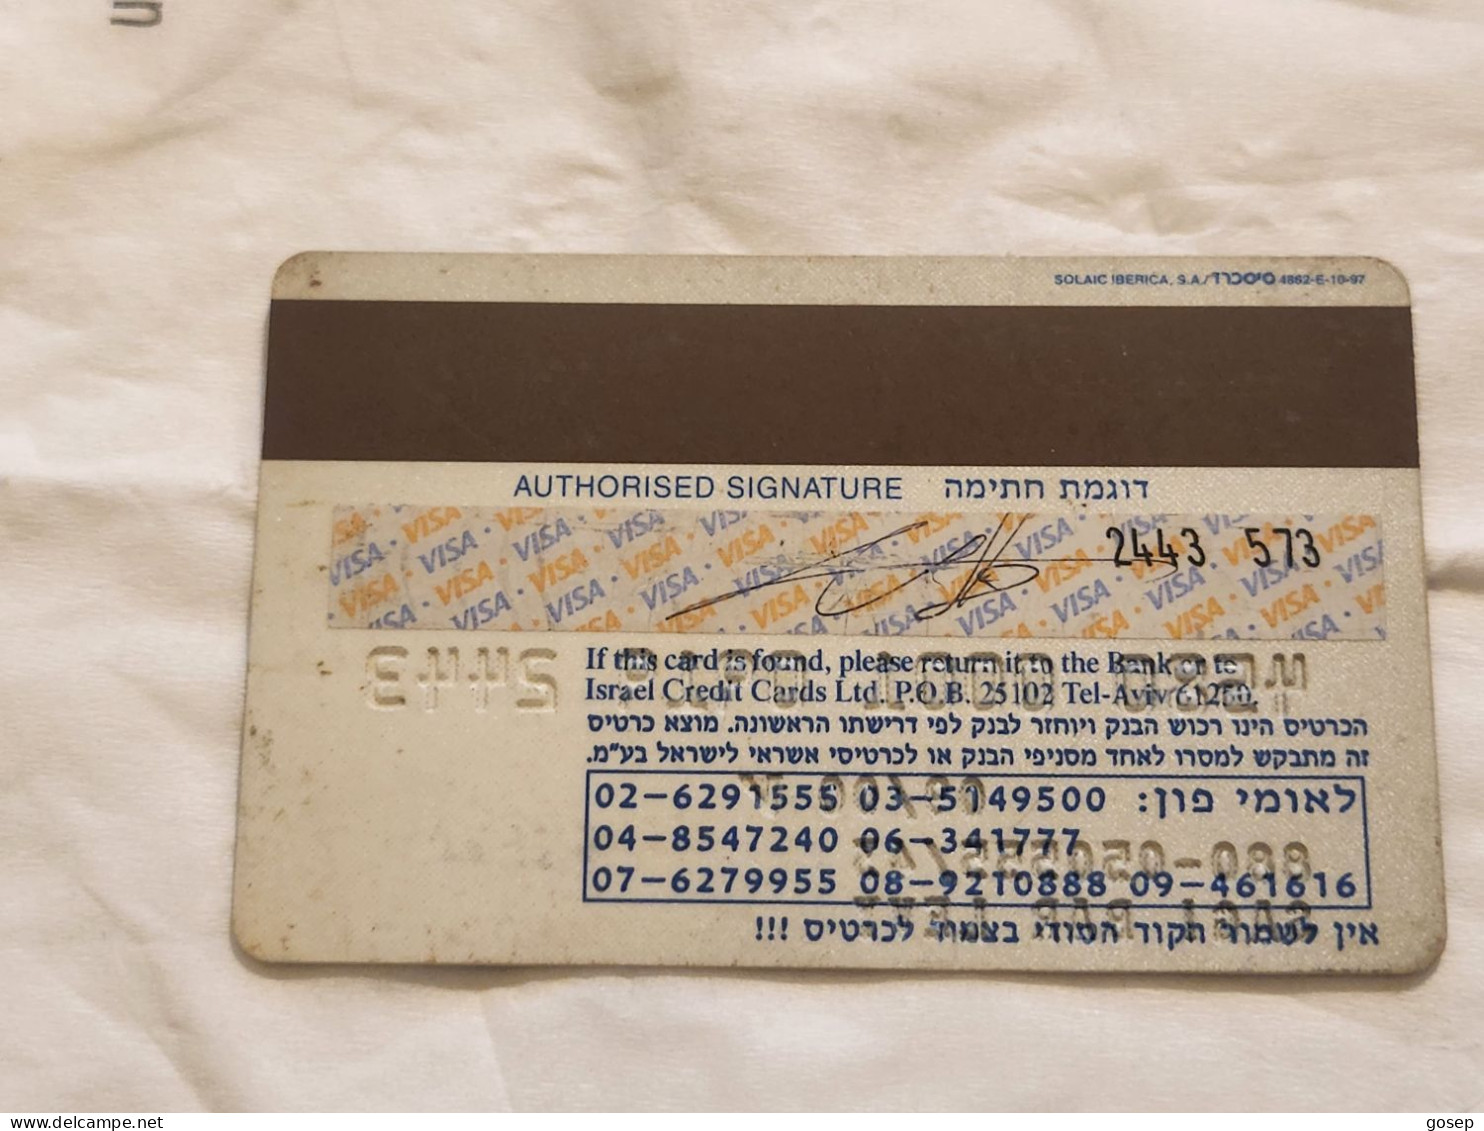 ISRAEL-VISA-BANK LEUMI-(4580-0001-0919-2443)-(09/00)-used Card - Carte Di Credito (scadenza Min. 10 Anni)